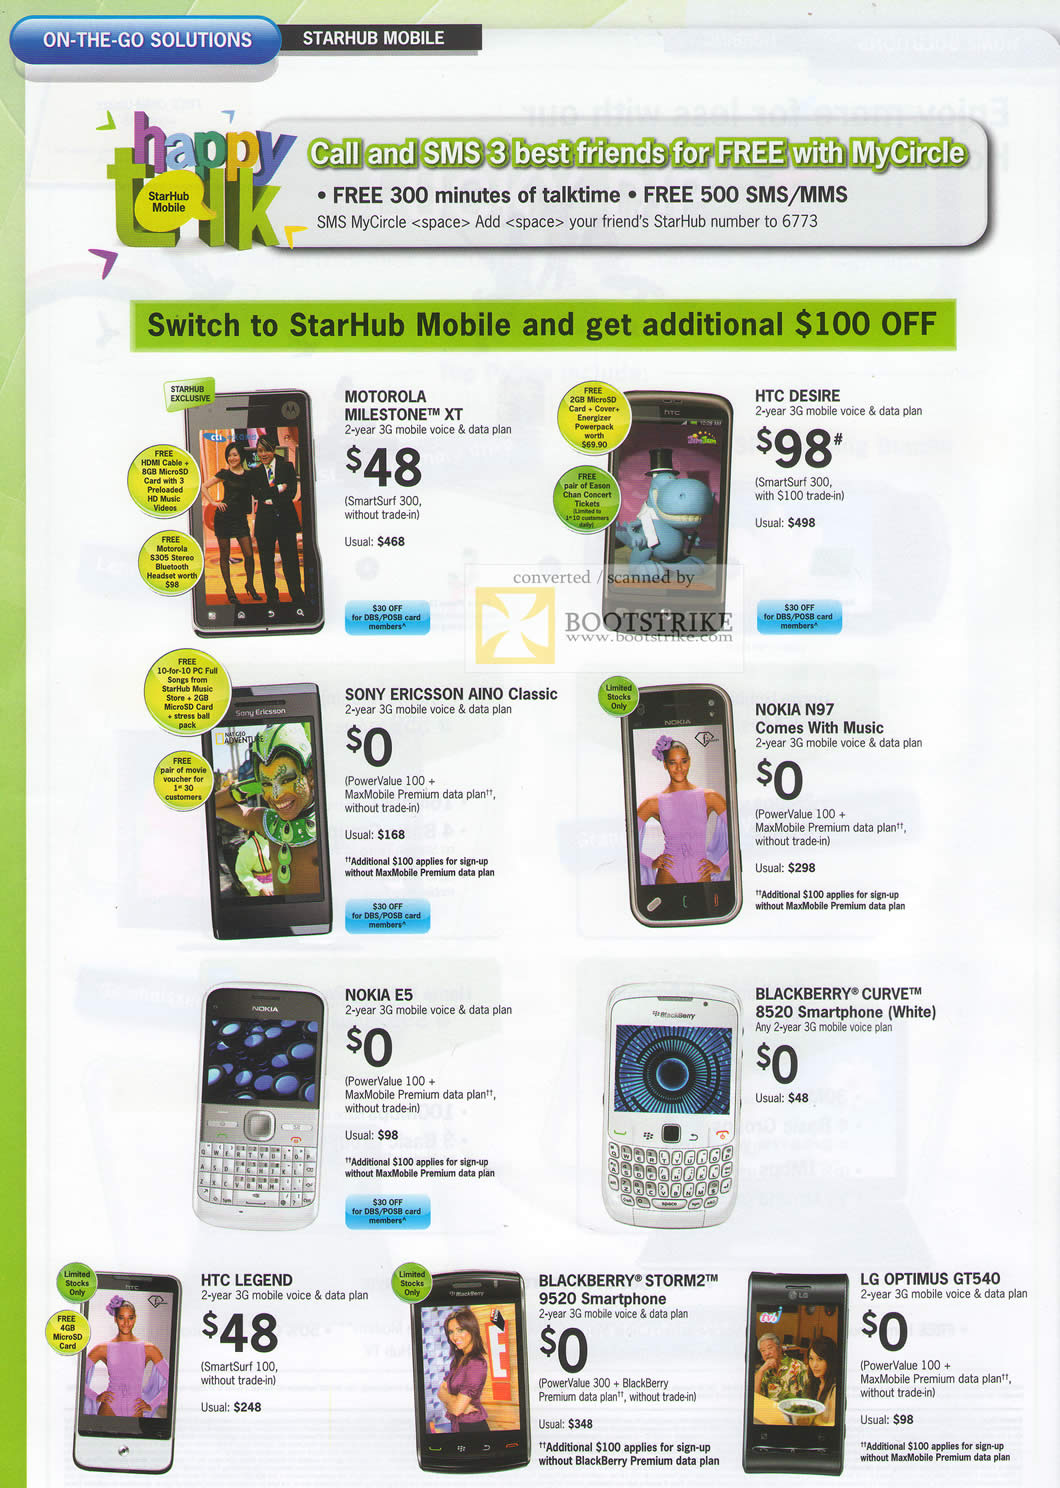 Comex 2010 price list image brochure of Starhub Mobile Phones Motorola HTC Desire Sony Ericsson Nokia N97 E5 Blackberry HTC LG Optimus GT540